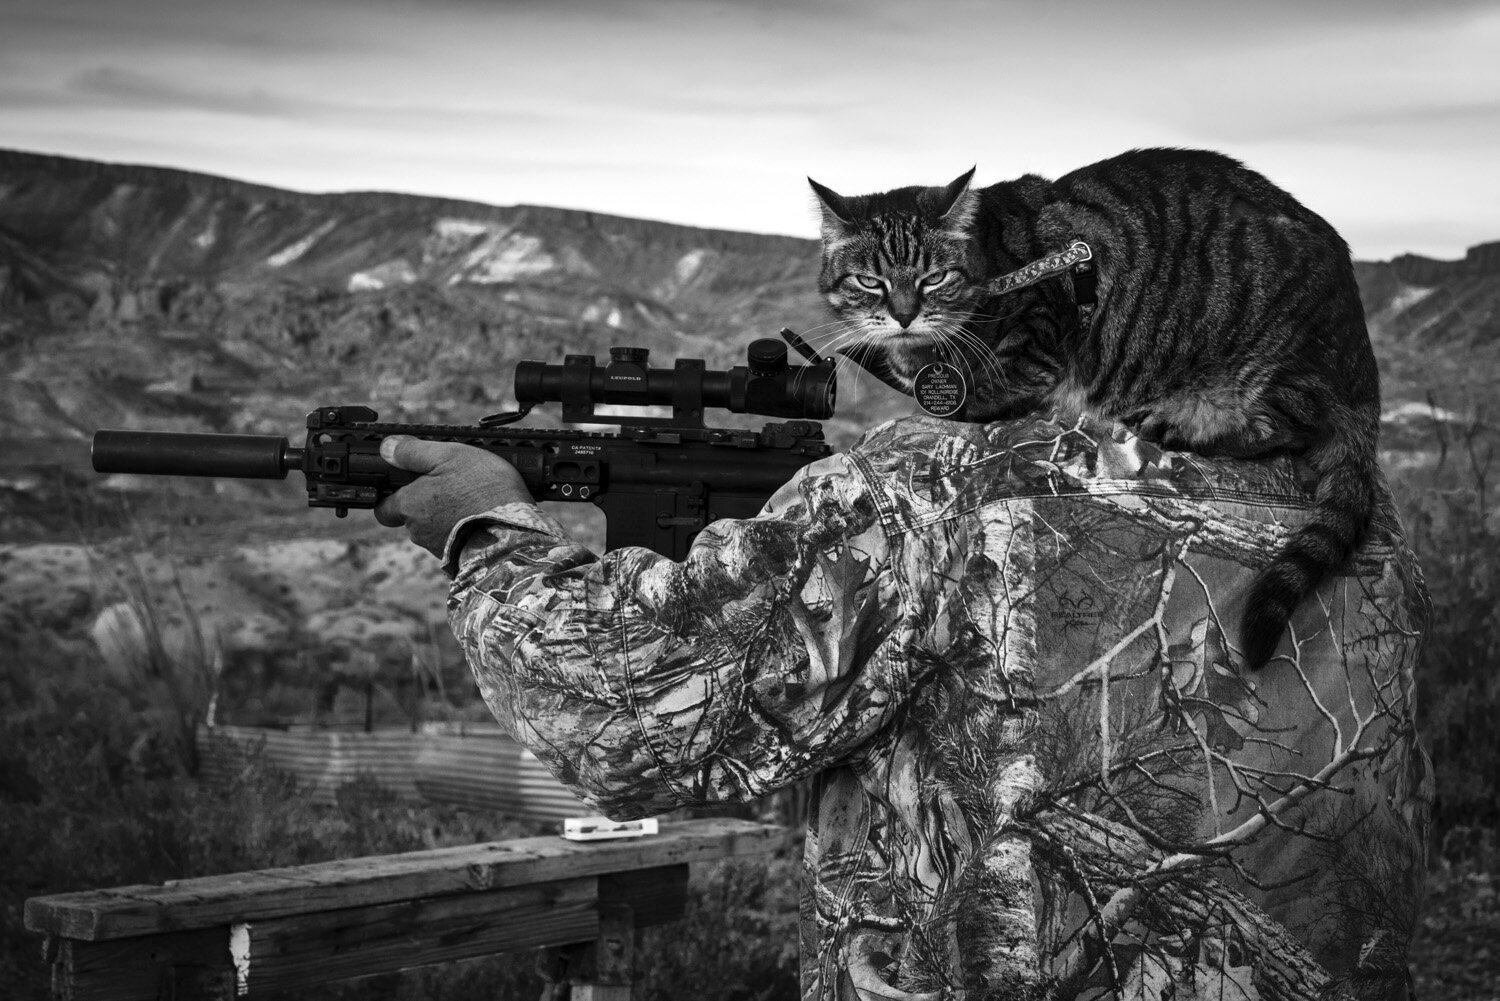  Cat and machine gun Presidio County, Texas 2020    3:2  